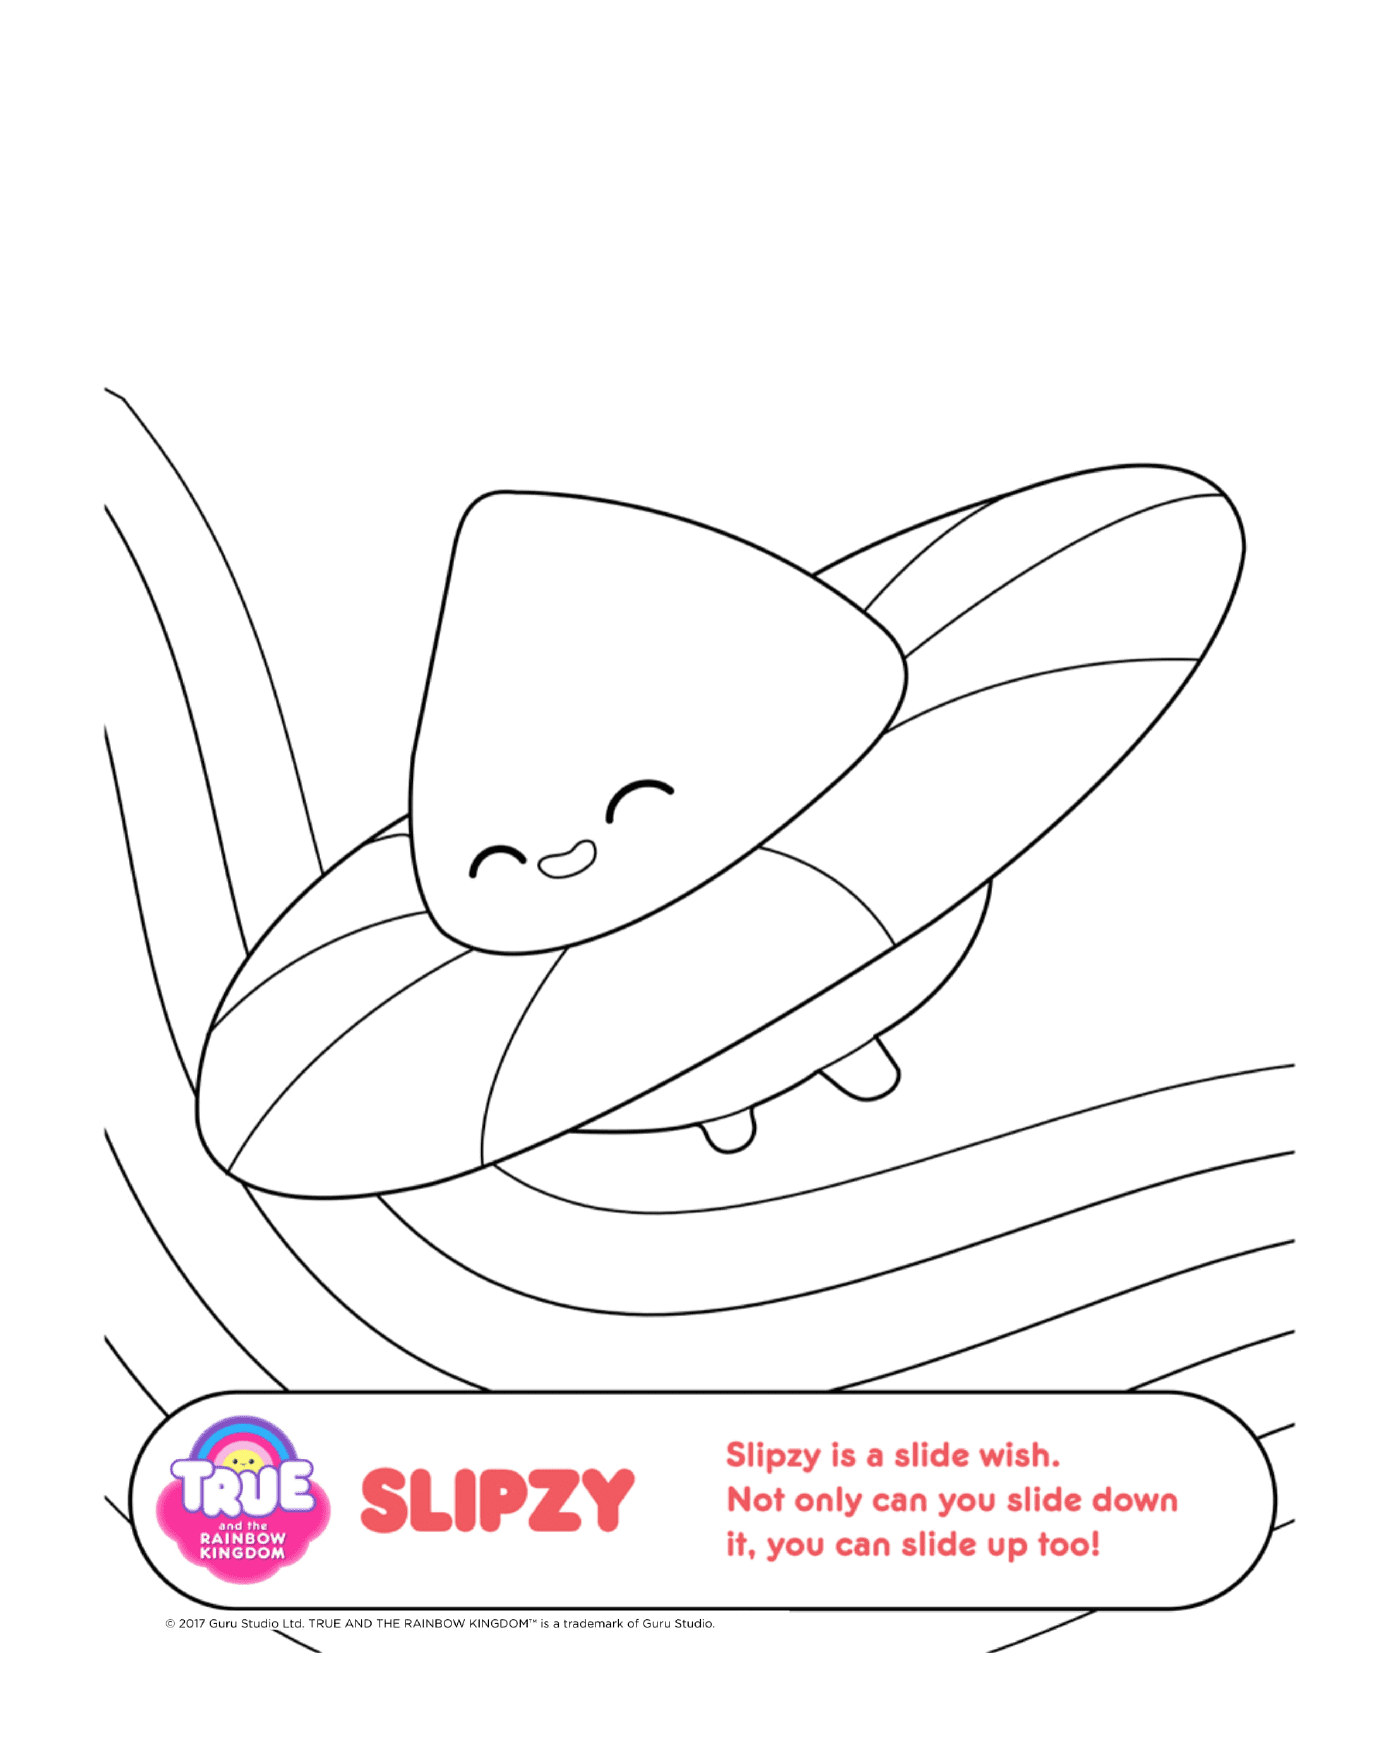  Slipzy, an image 